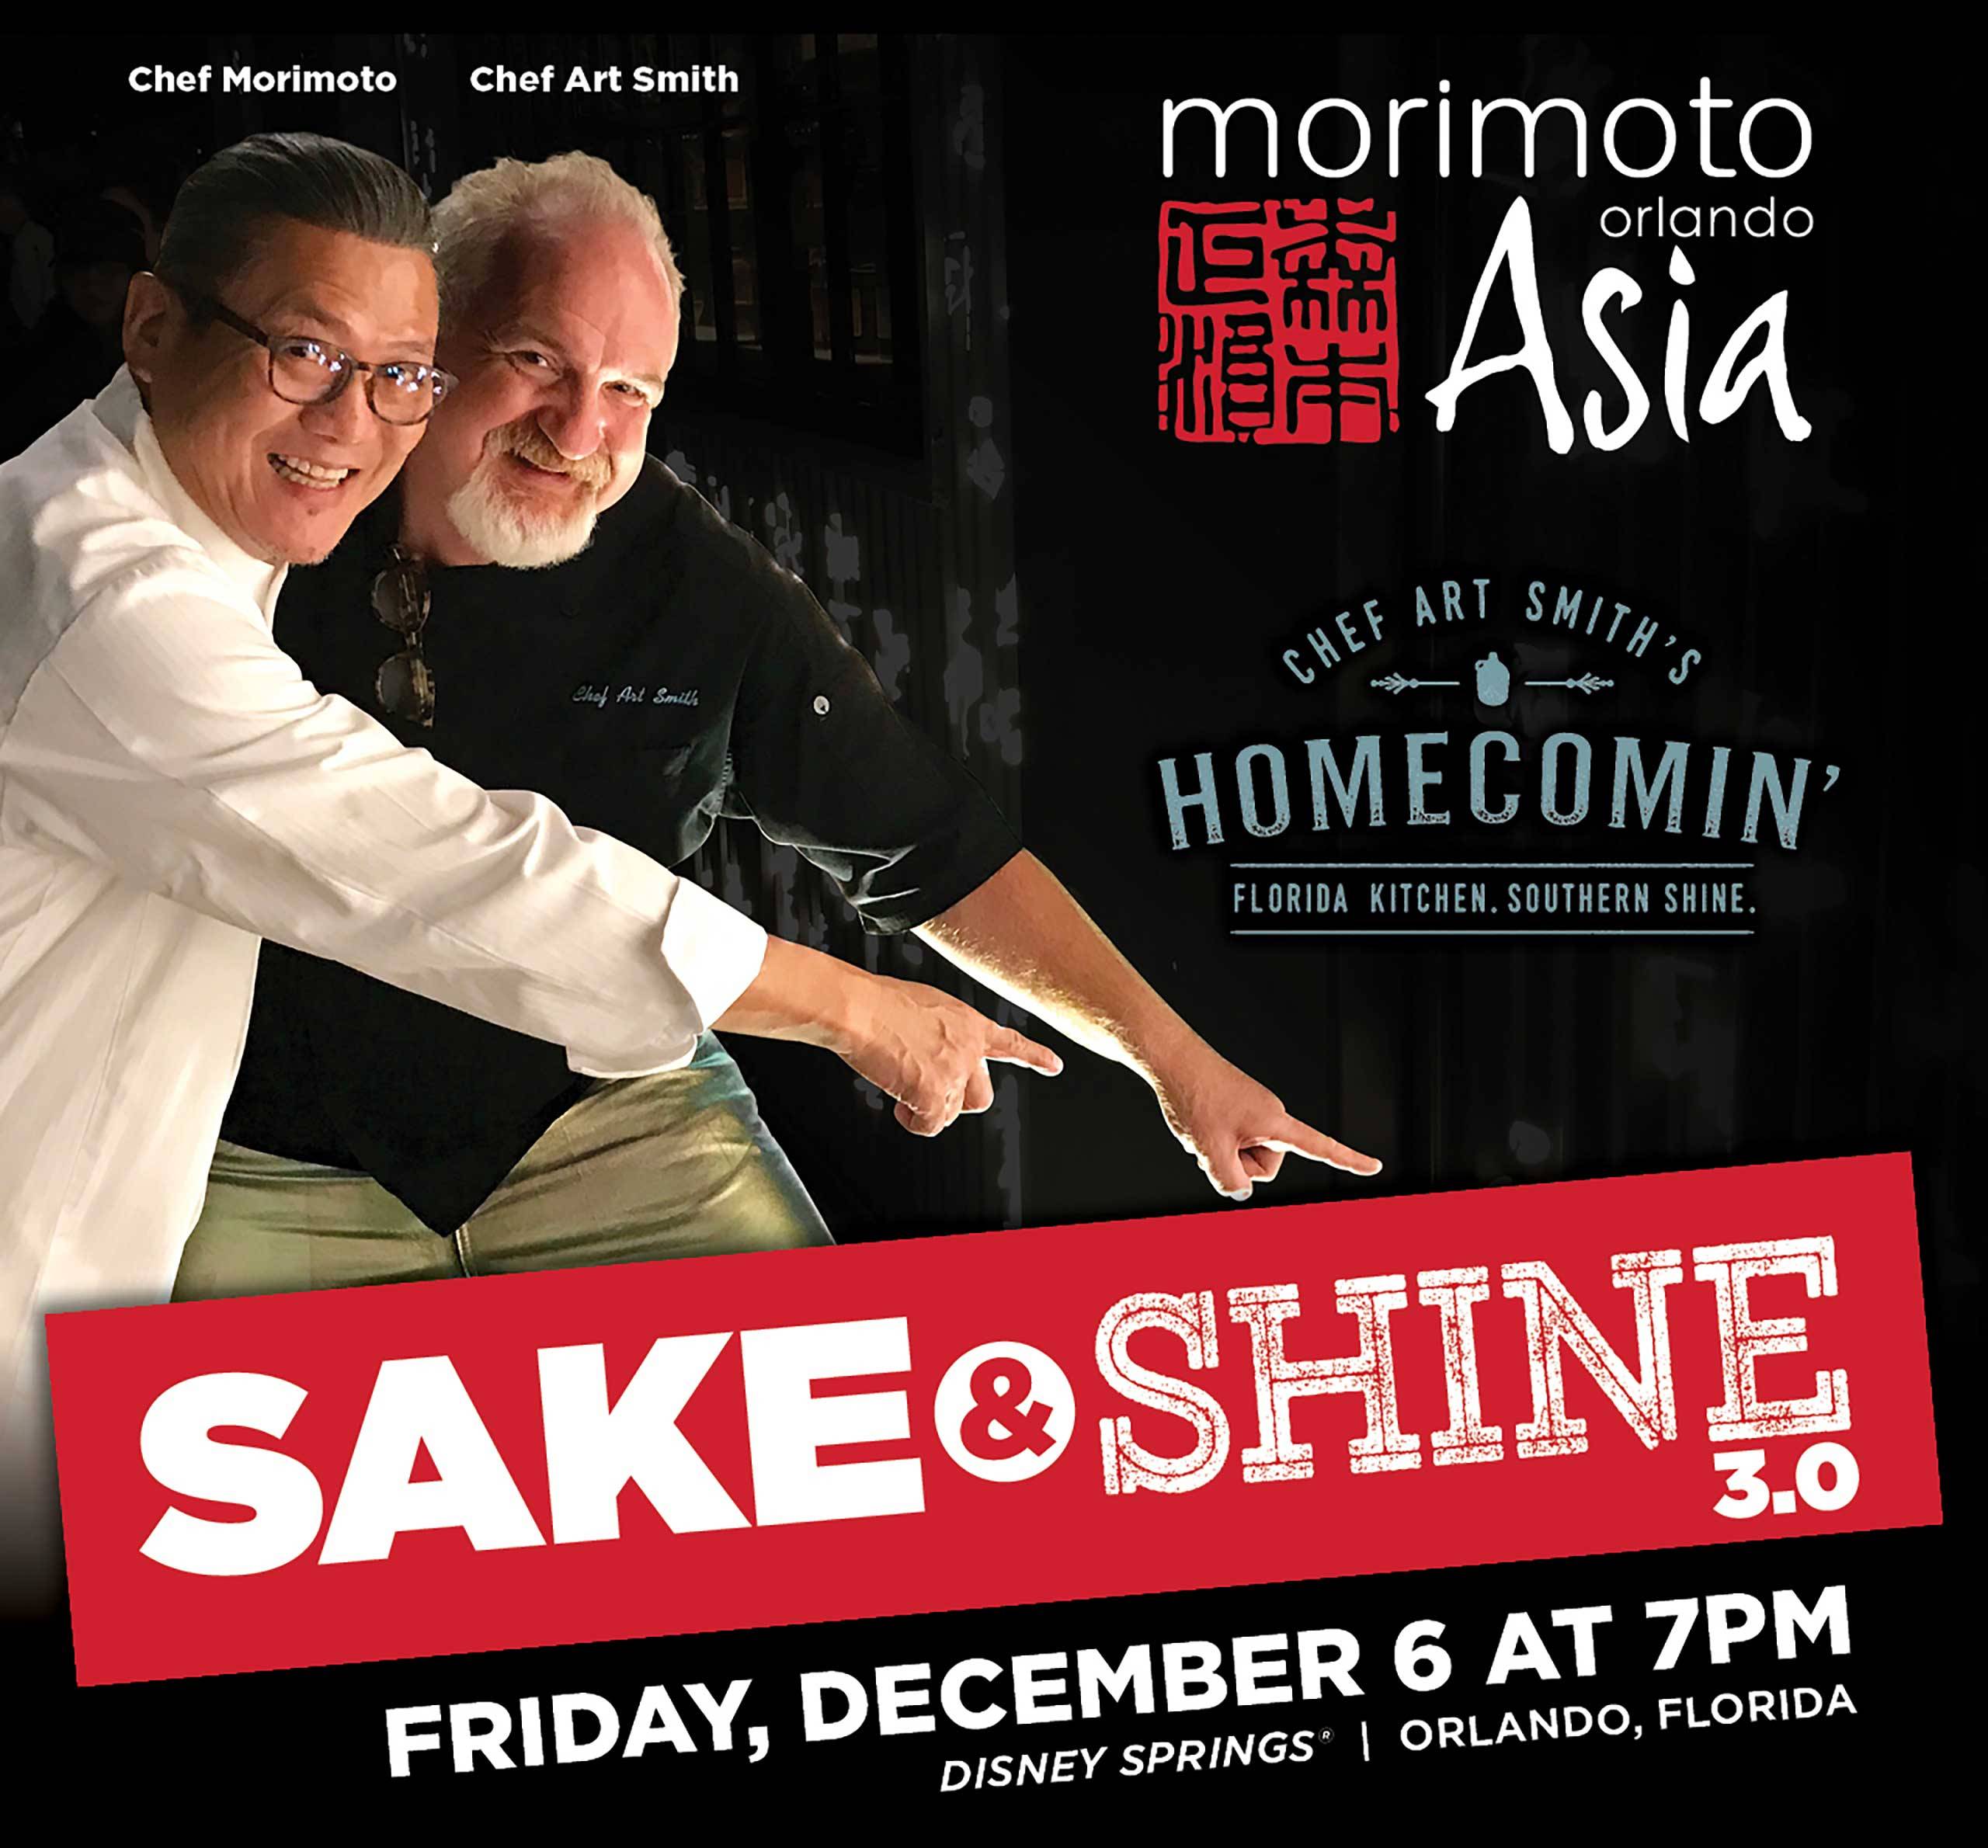 Celebrity chefs Masaharu Morimoto and Art Smith to host Sake and Shine 3.0 at Disney Springs